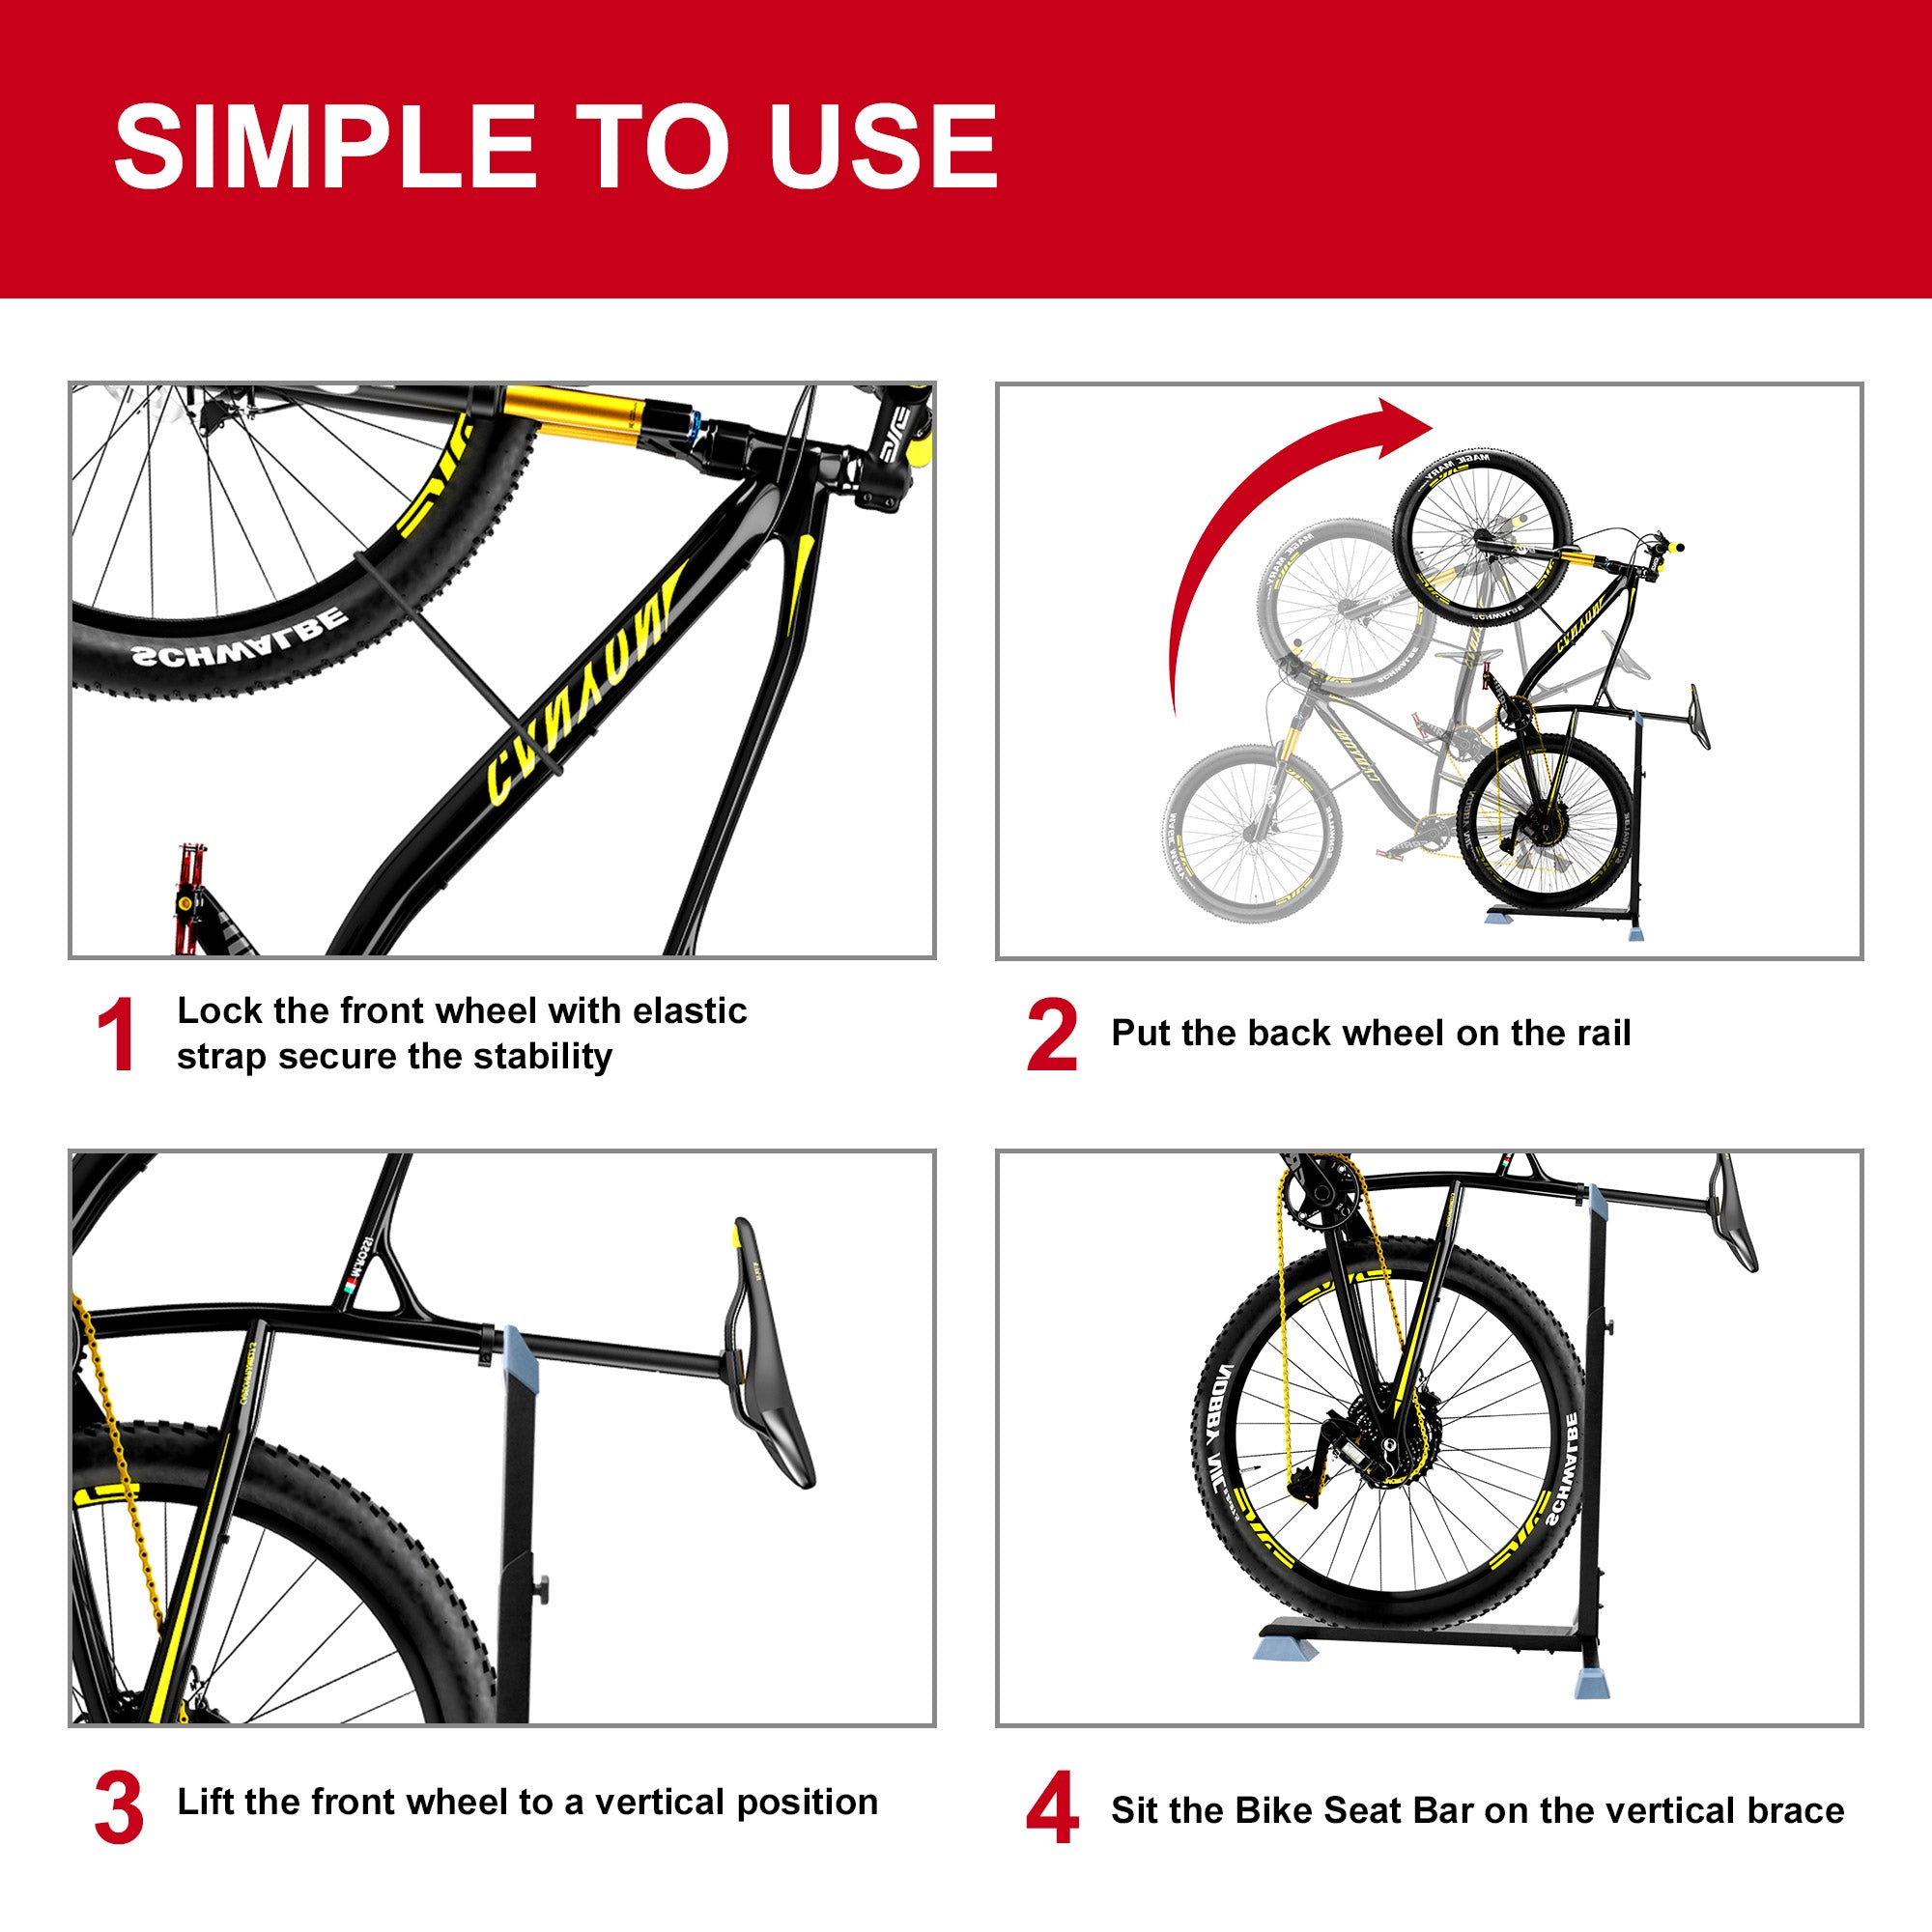 CMC Bike Stand Bicycle Storage Stand Space Saving Bike Stand for Condo, Storage Room, Garage and Display